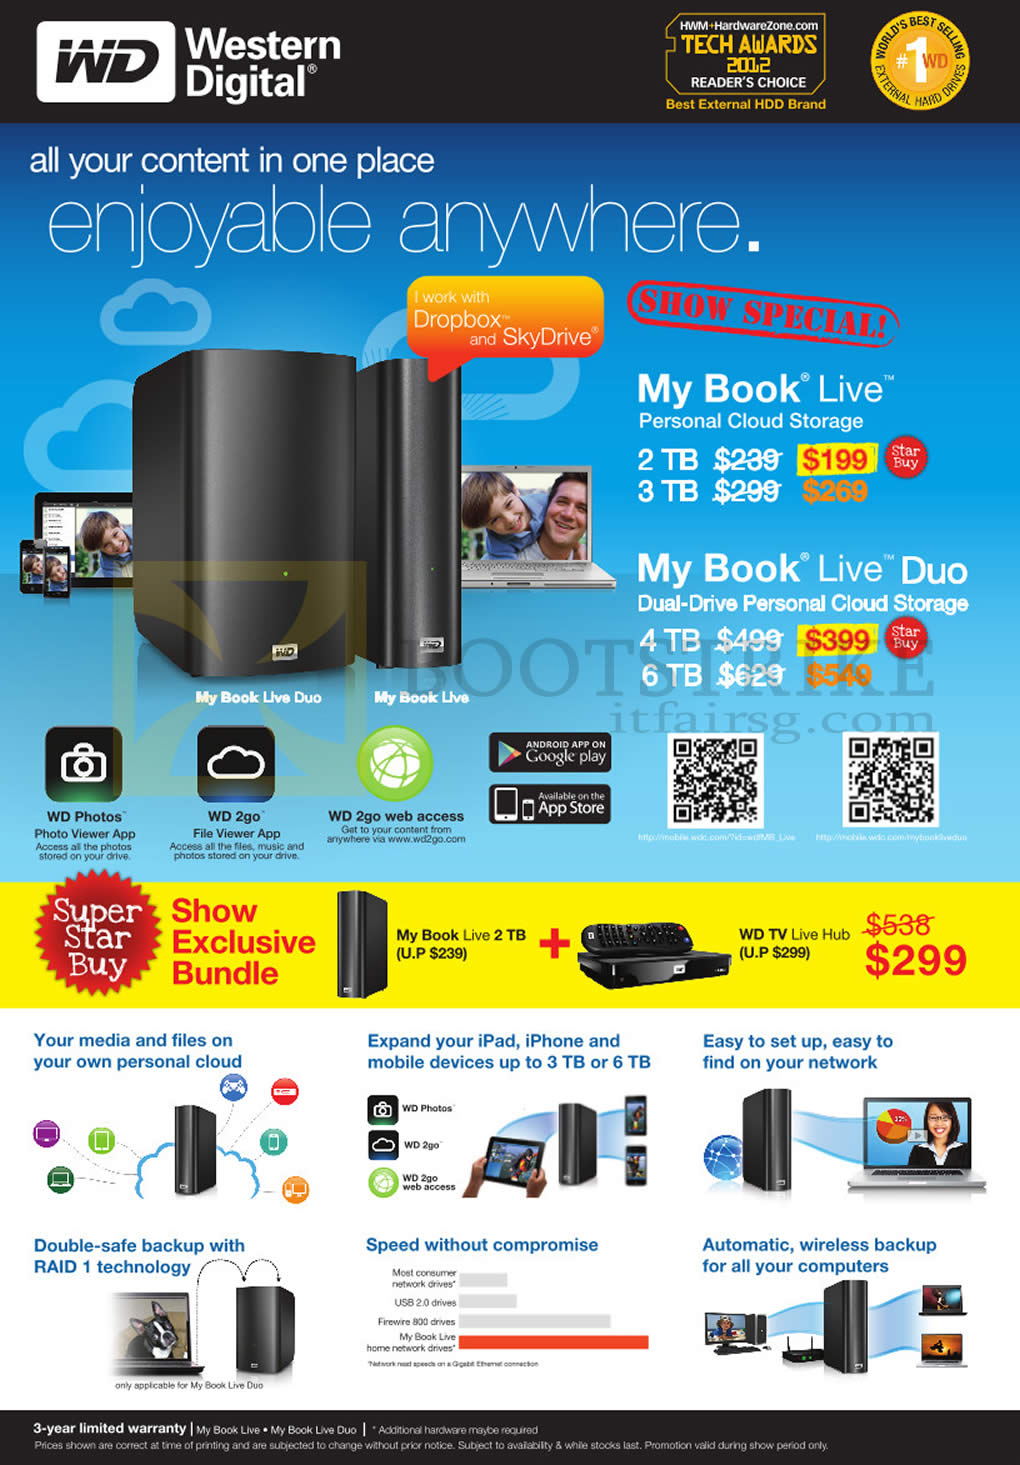 SITEX 2012 price list image brochure of Western Digital External Storage My Book Life, Duo, Personal Cloud Storage Features